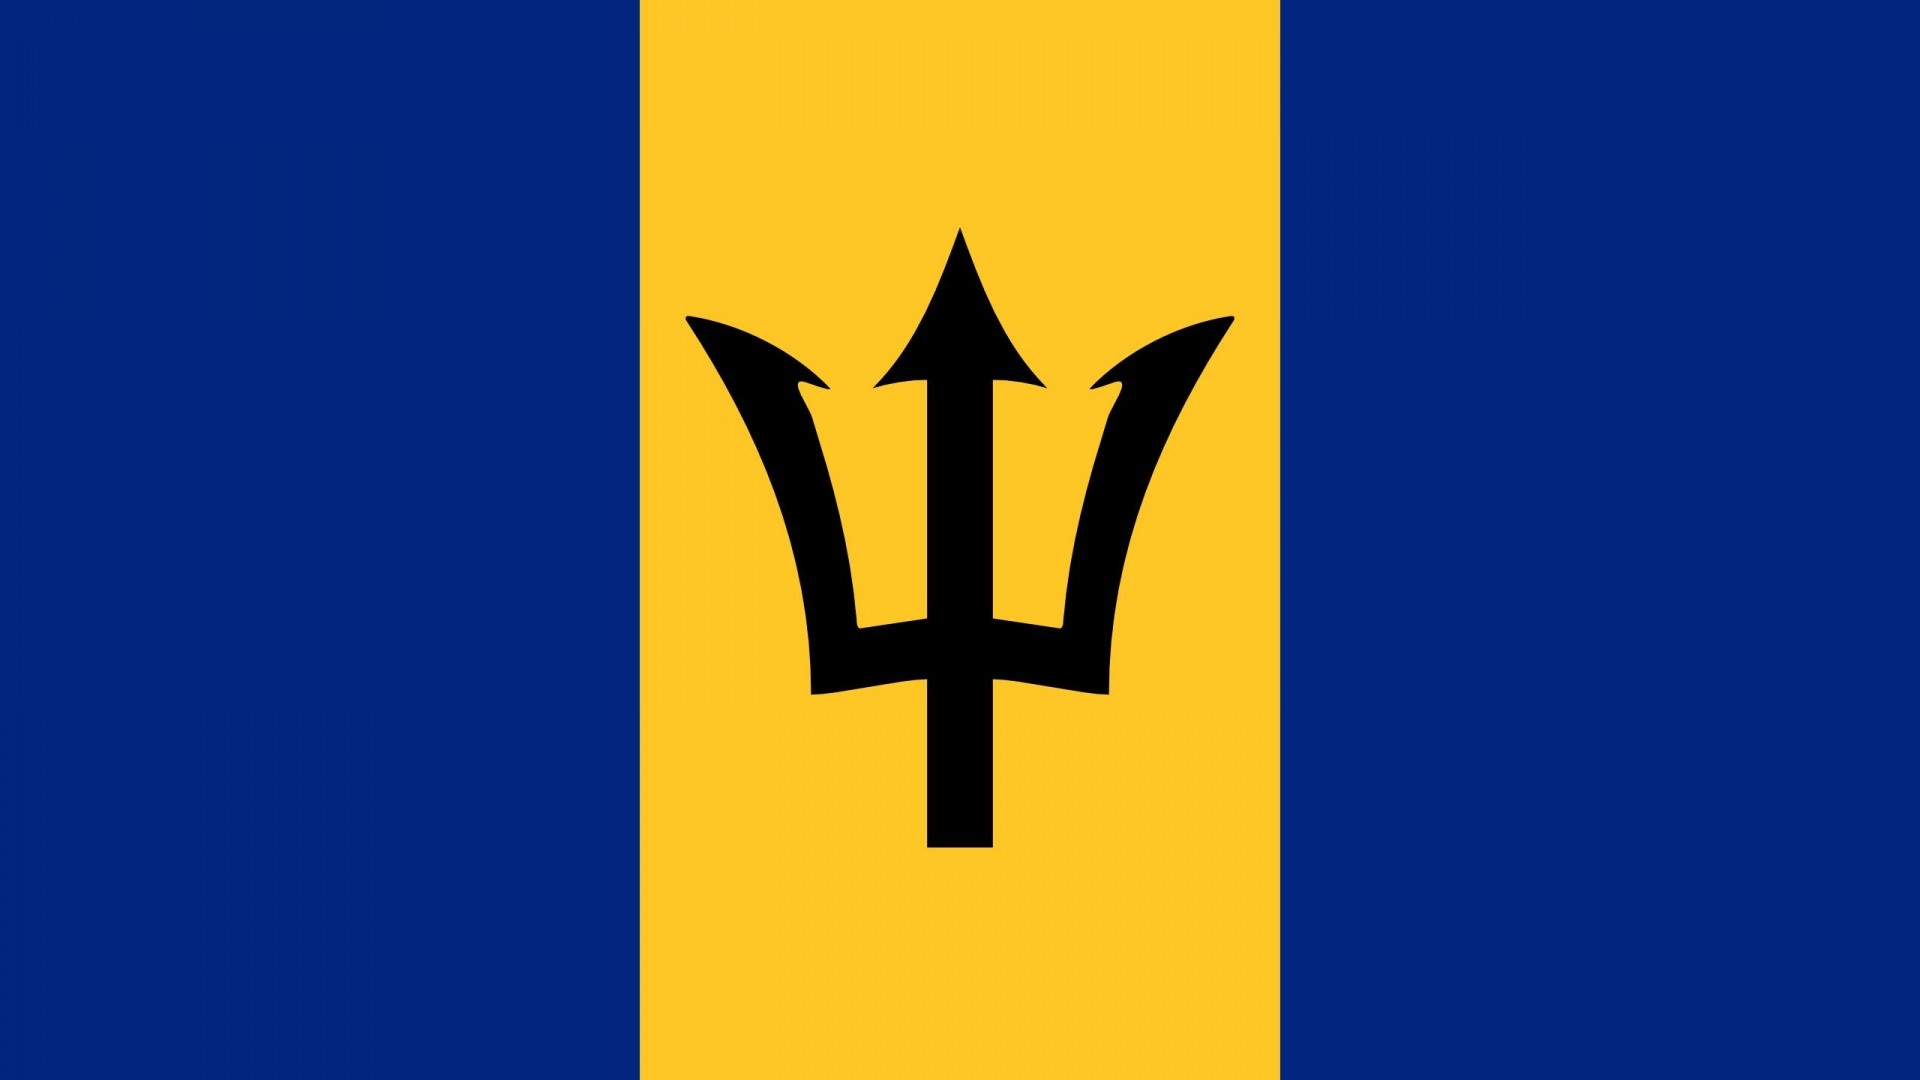 Barbados Flag Wallpaper High Definition Quality Widescreen